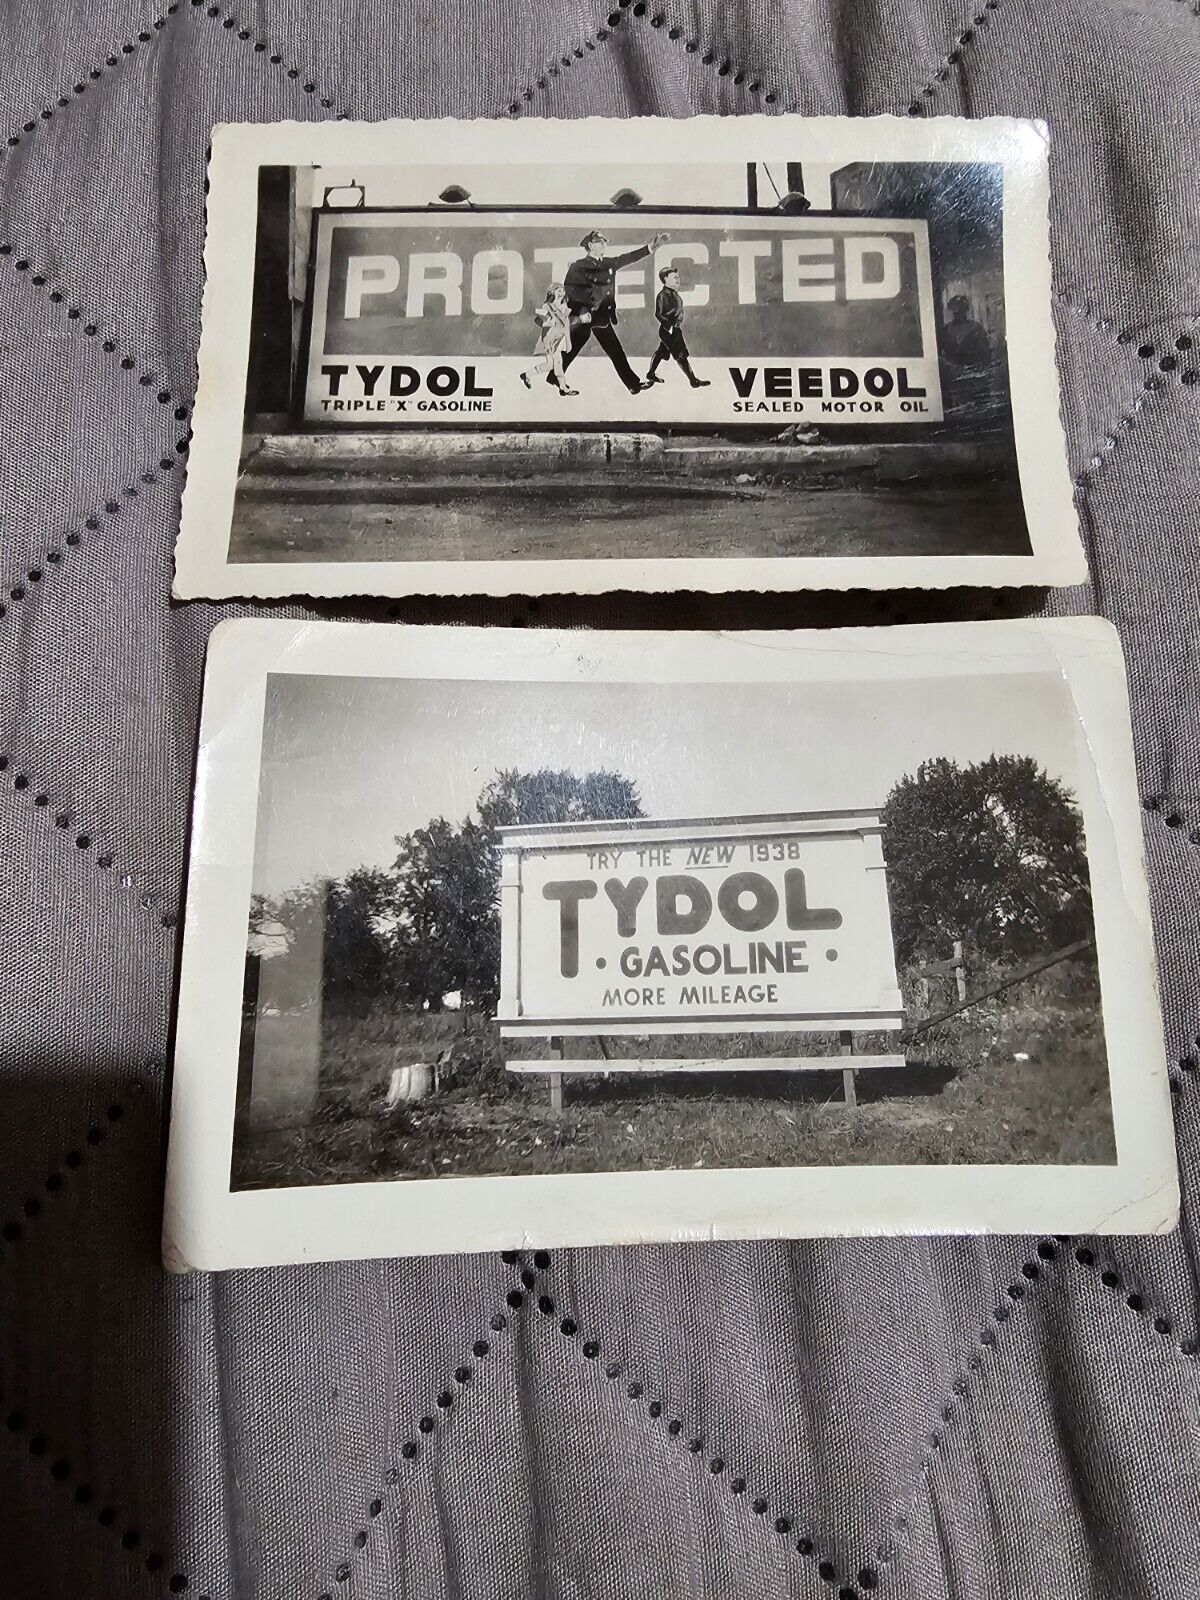 Vintage 1930s Tydol Gasoline Advertising Snapshots Lot Of 2 Billboards 